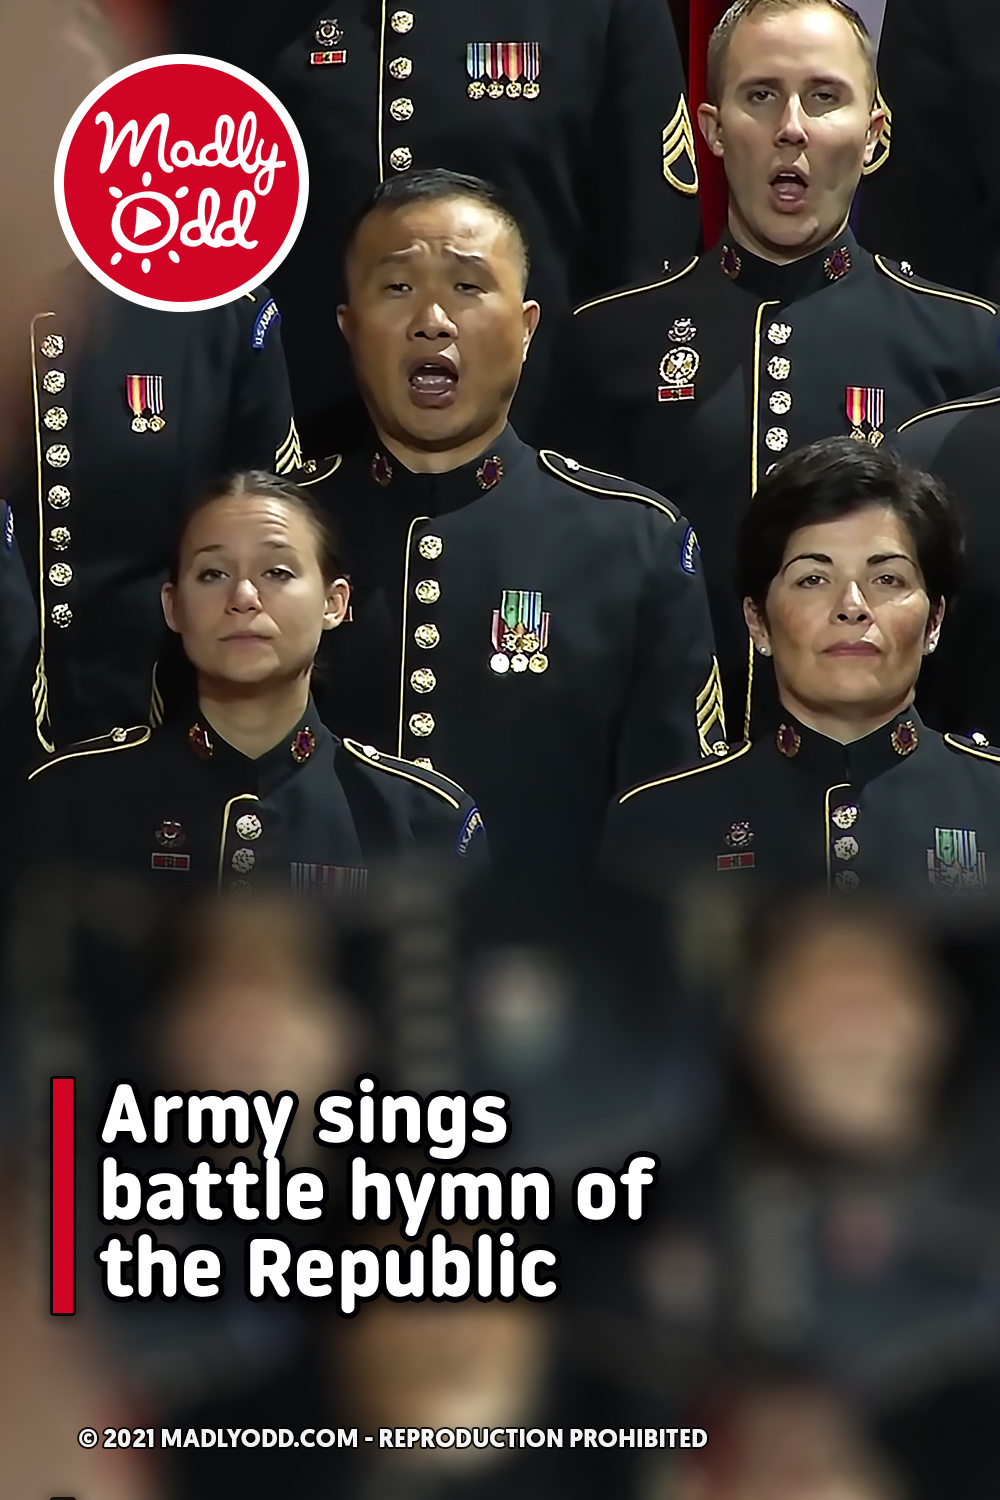 Army sings battle hymn of the Republic